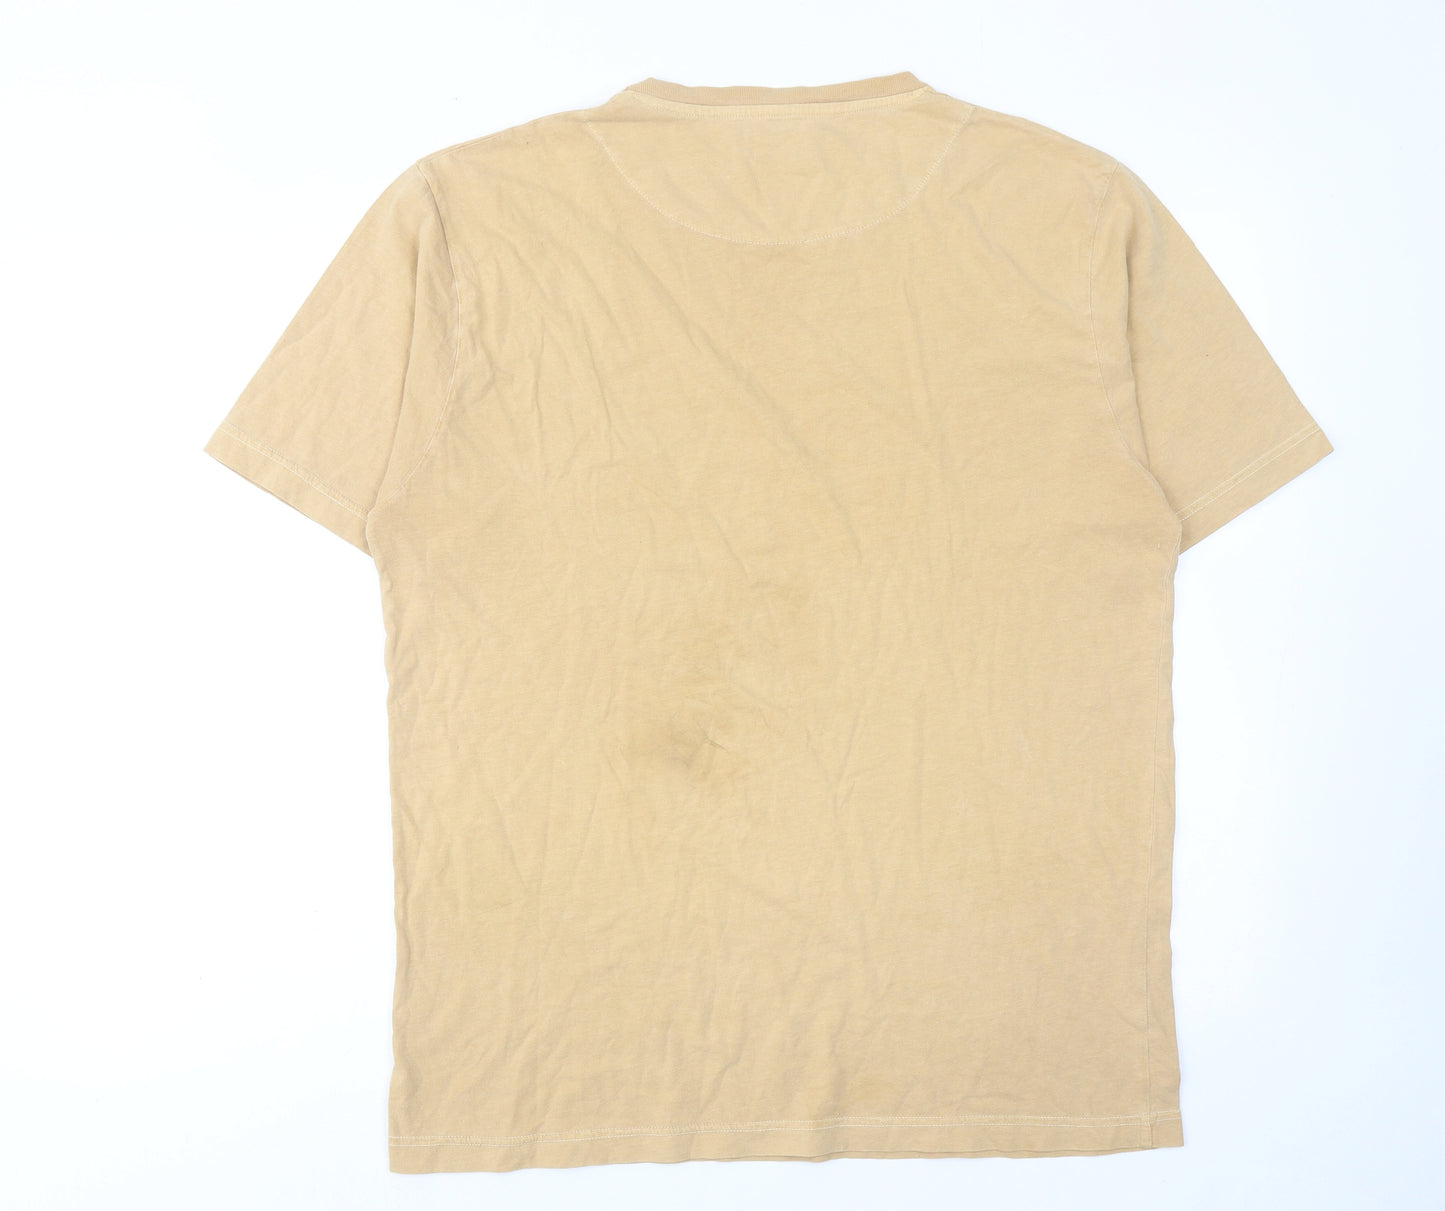 Guise Mens Brown Cotton T-Shirt Size L Round Neck